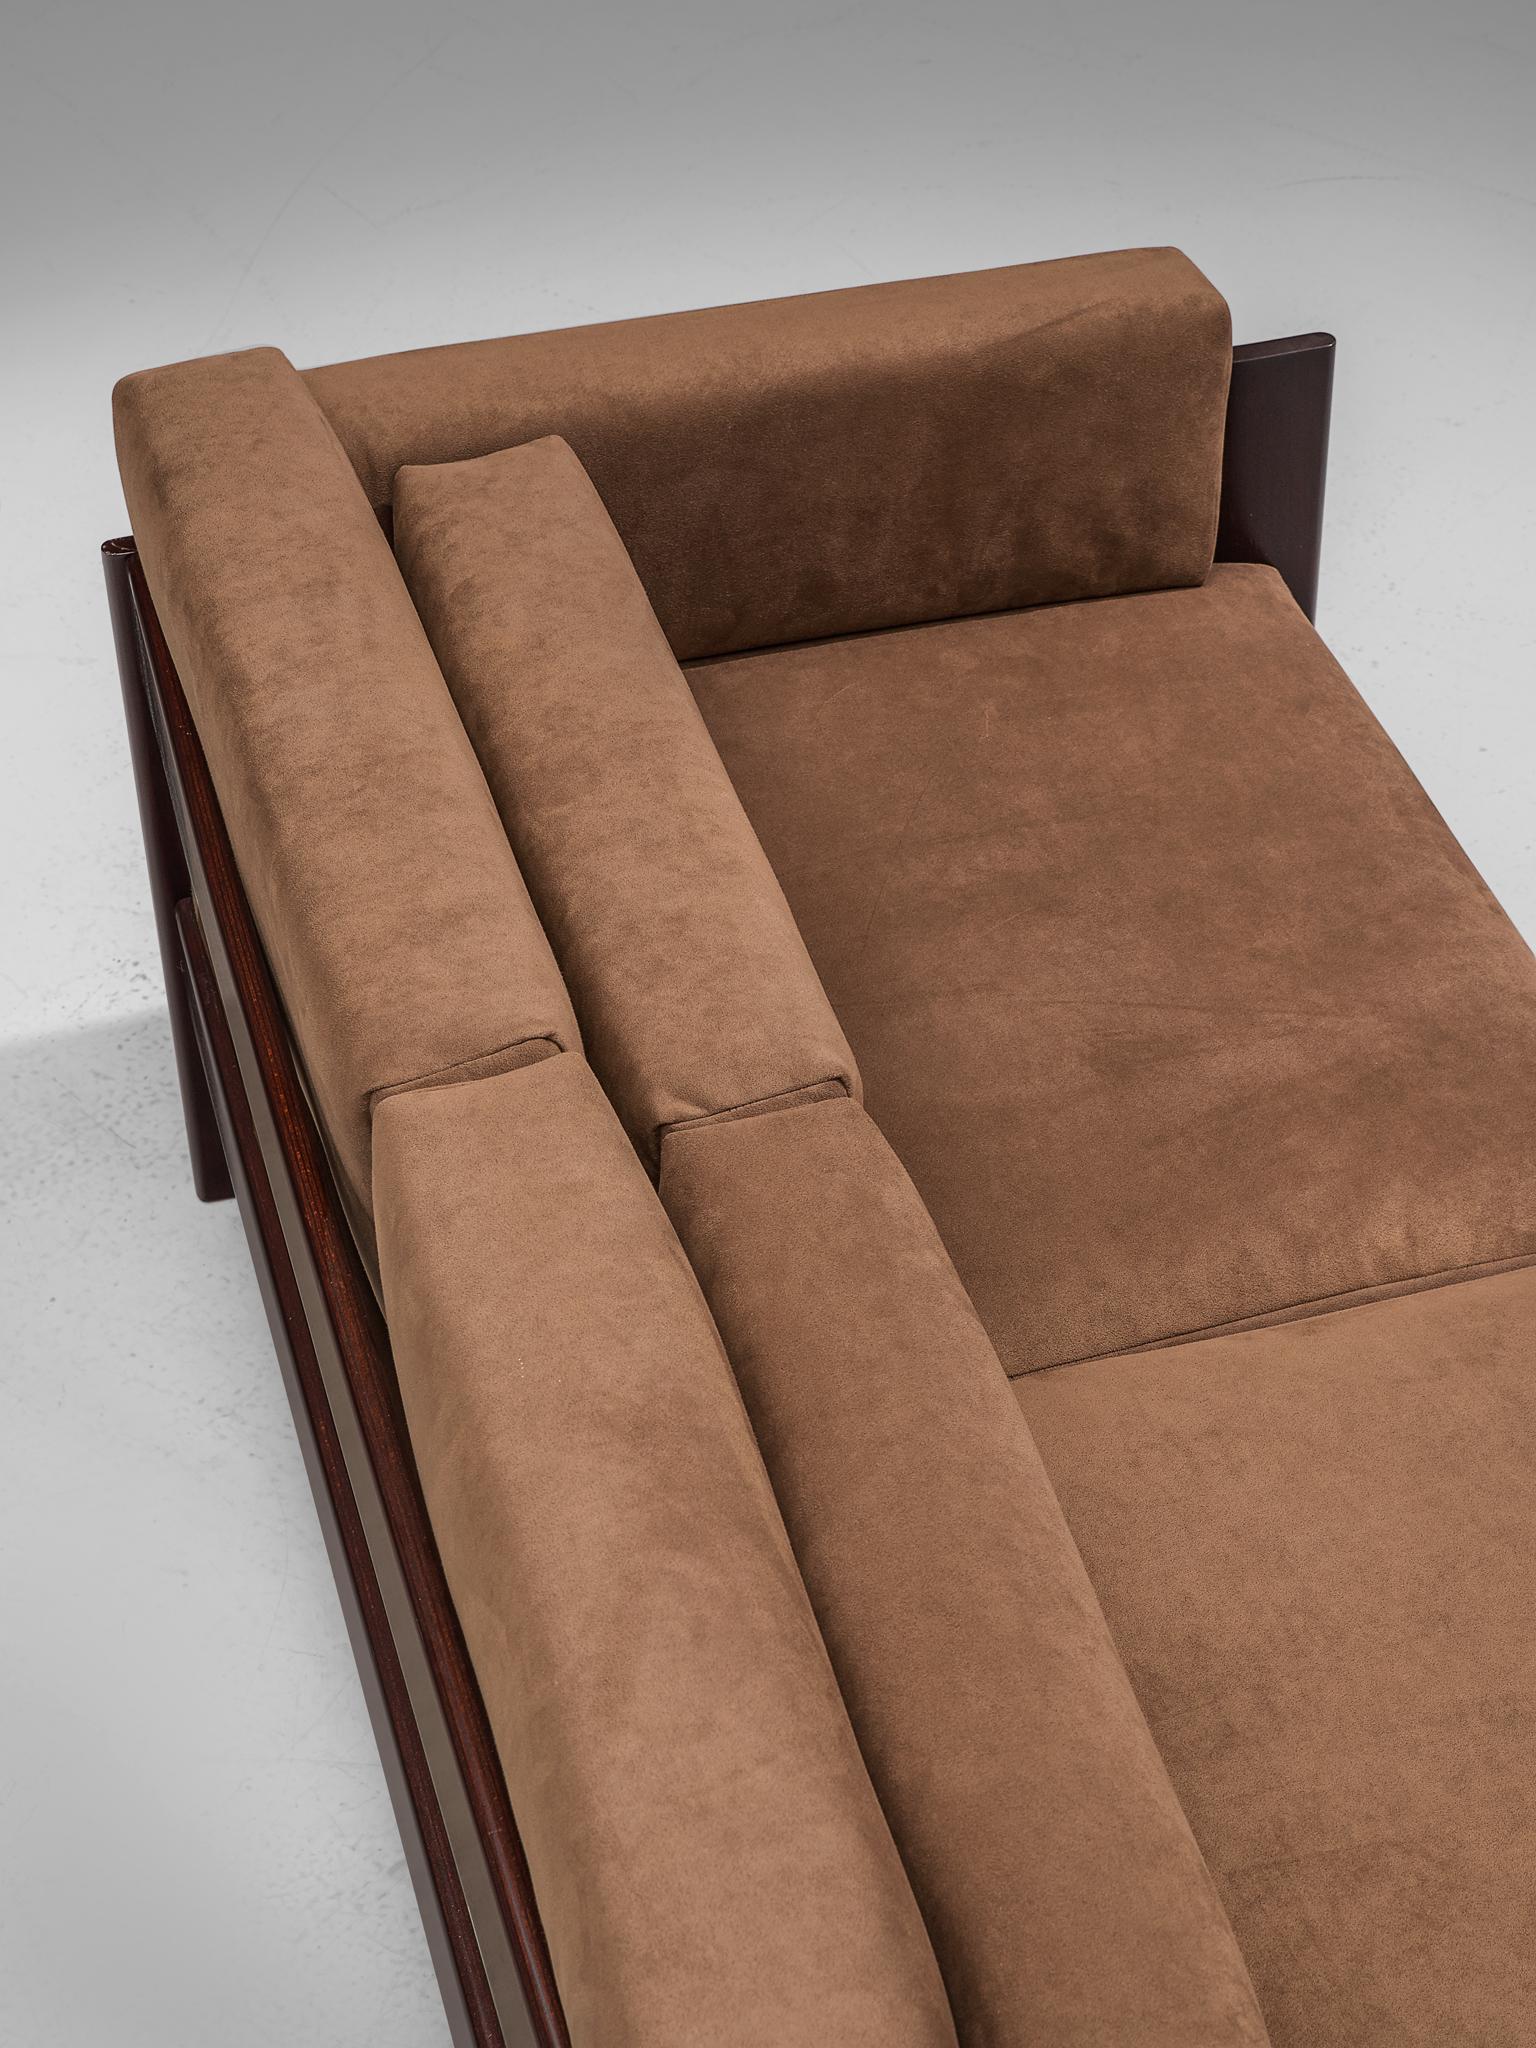 Sergio Asti 'Zelda' Two-Seat Sofa with Taupe Fabric 1